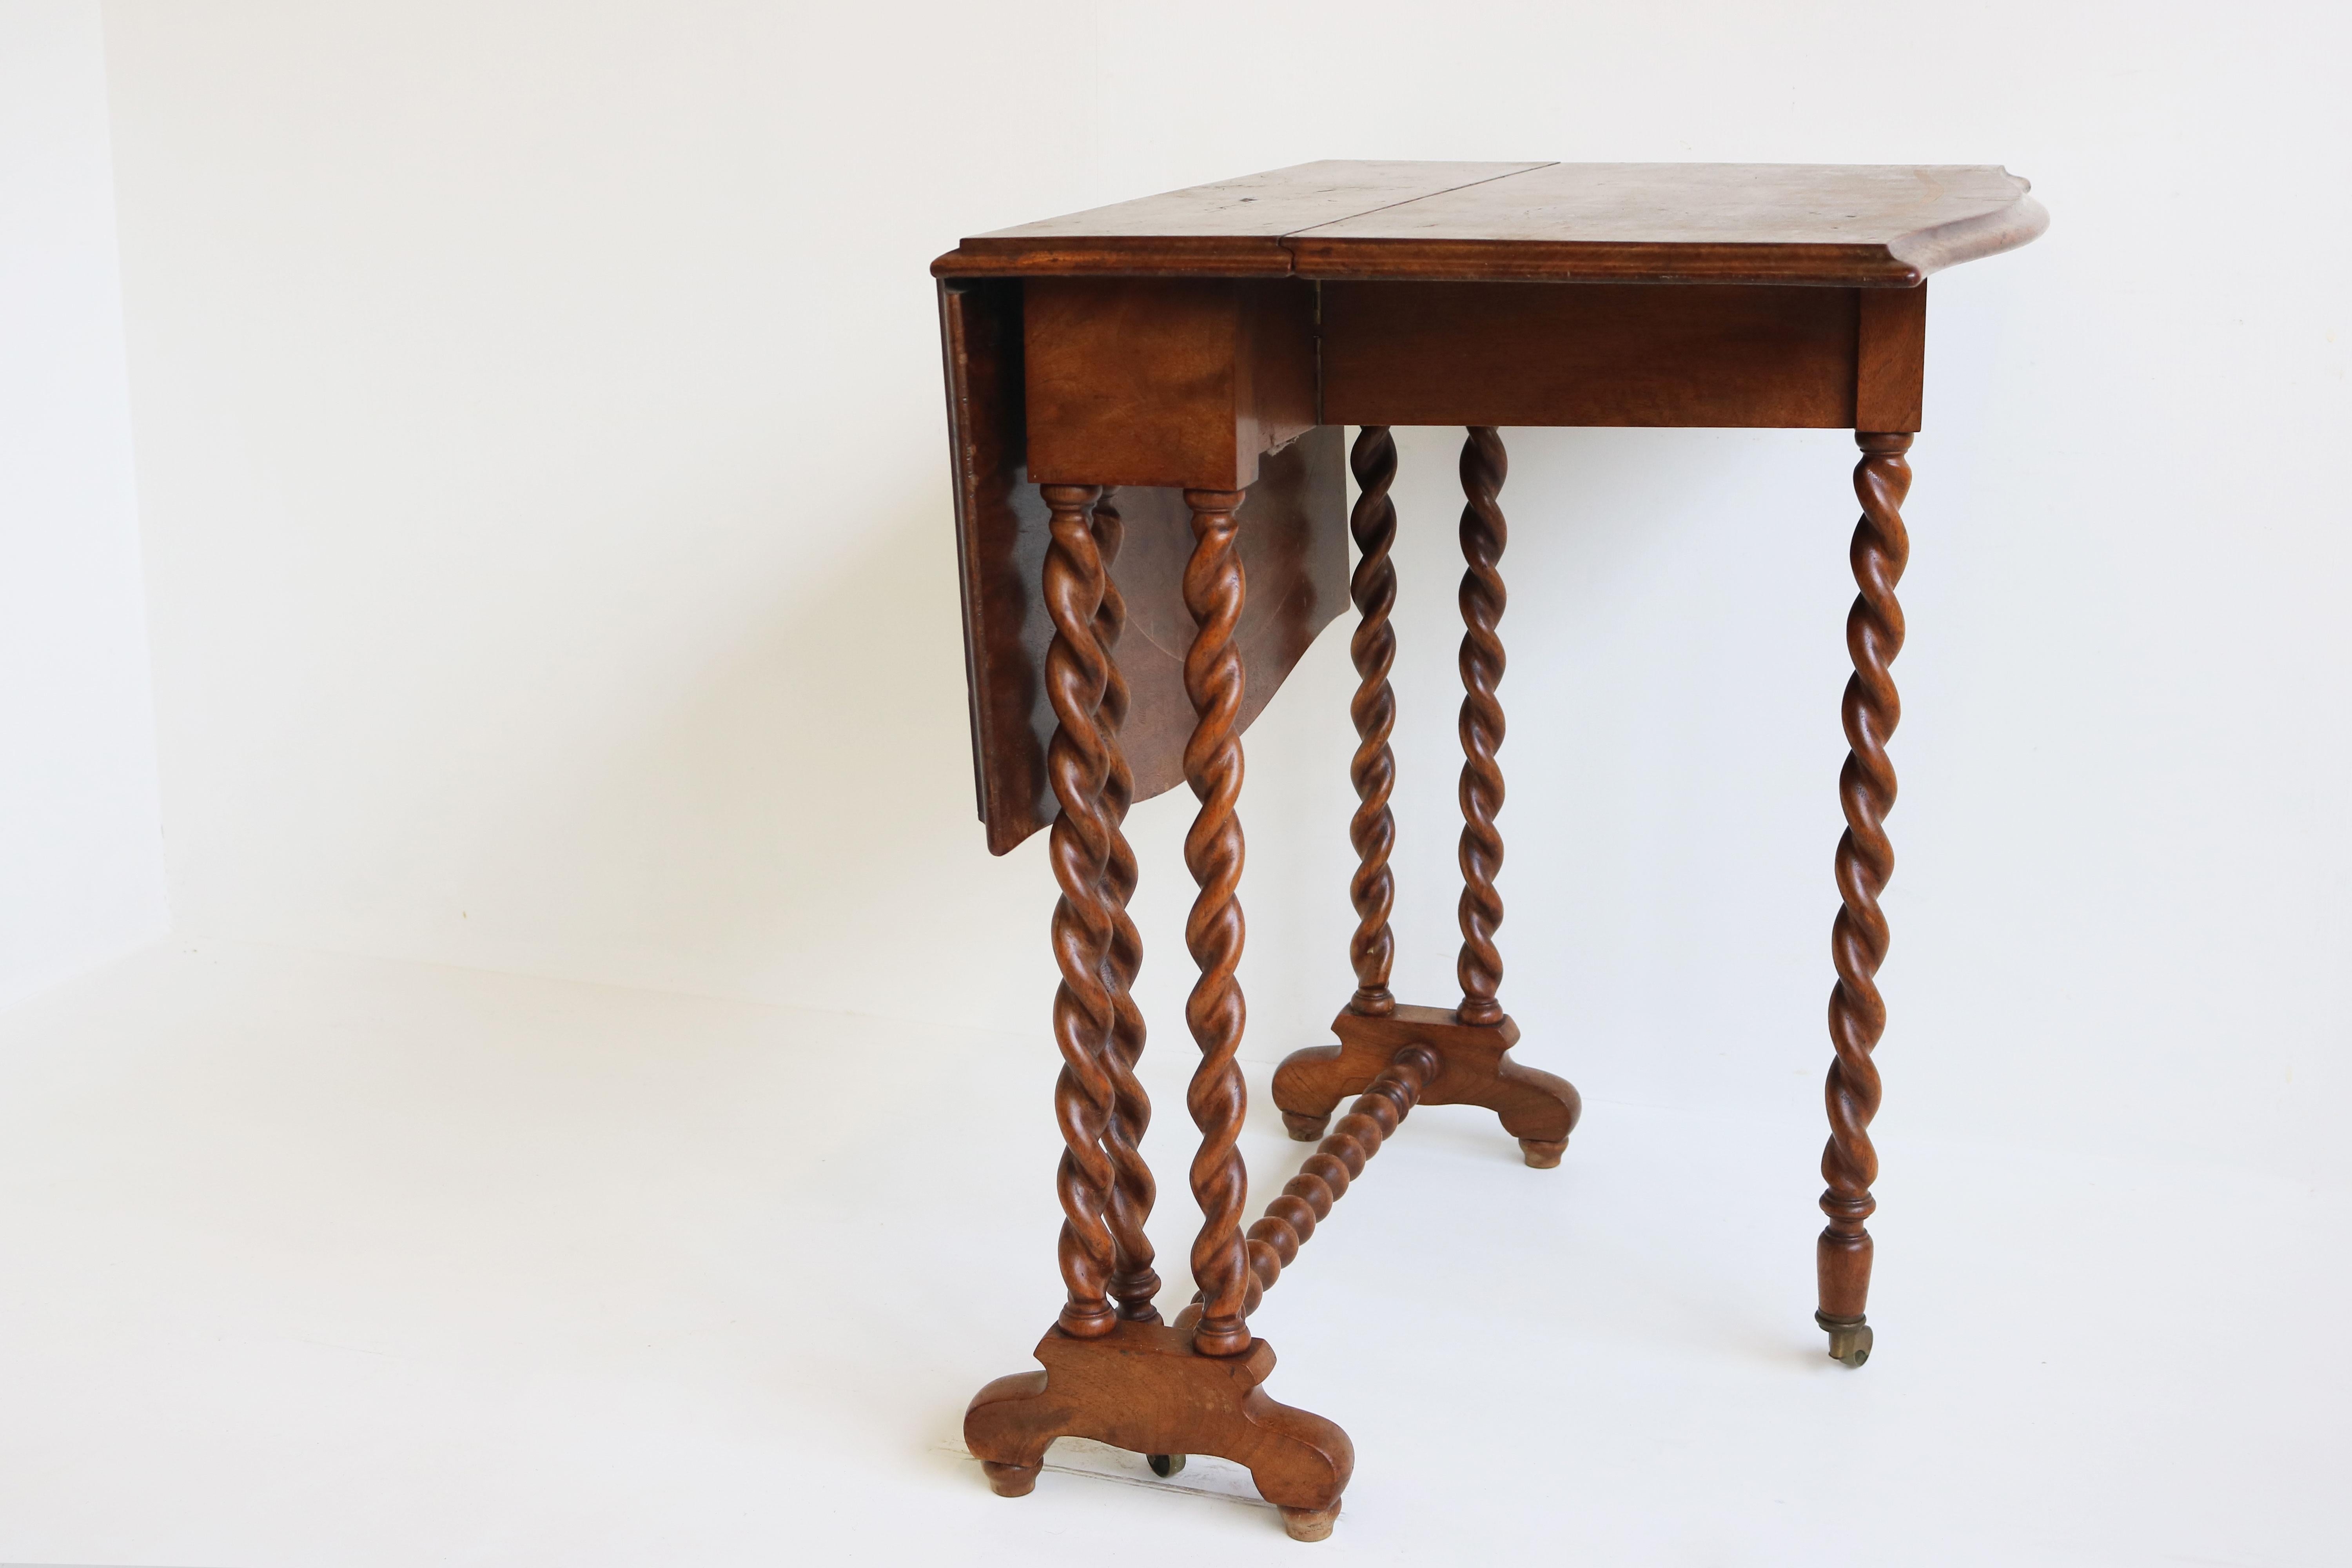 Walnut Antique English Barley Twist Foldable Table / Gate-Leg Table 19th Century Burl For Sale